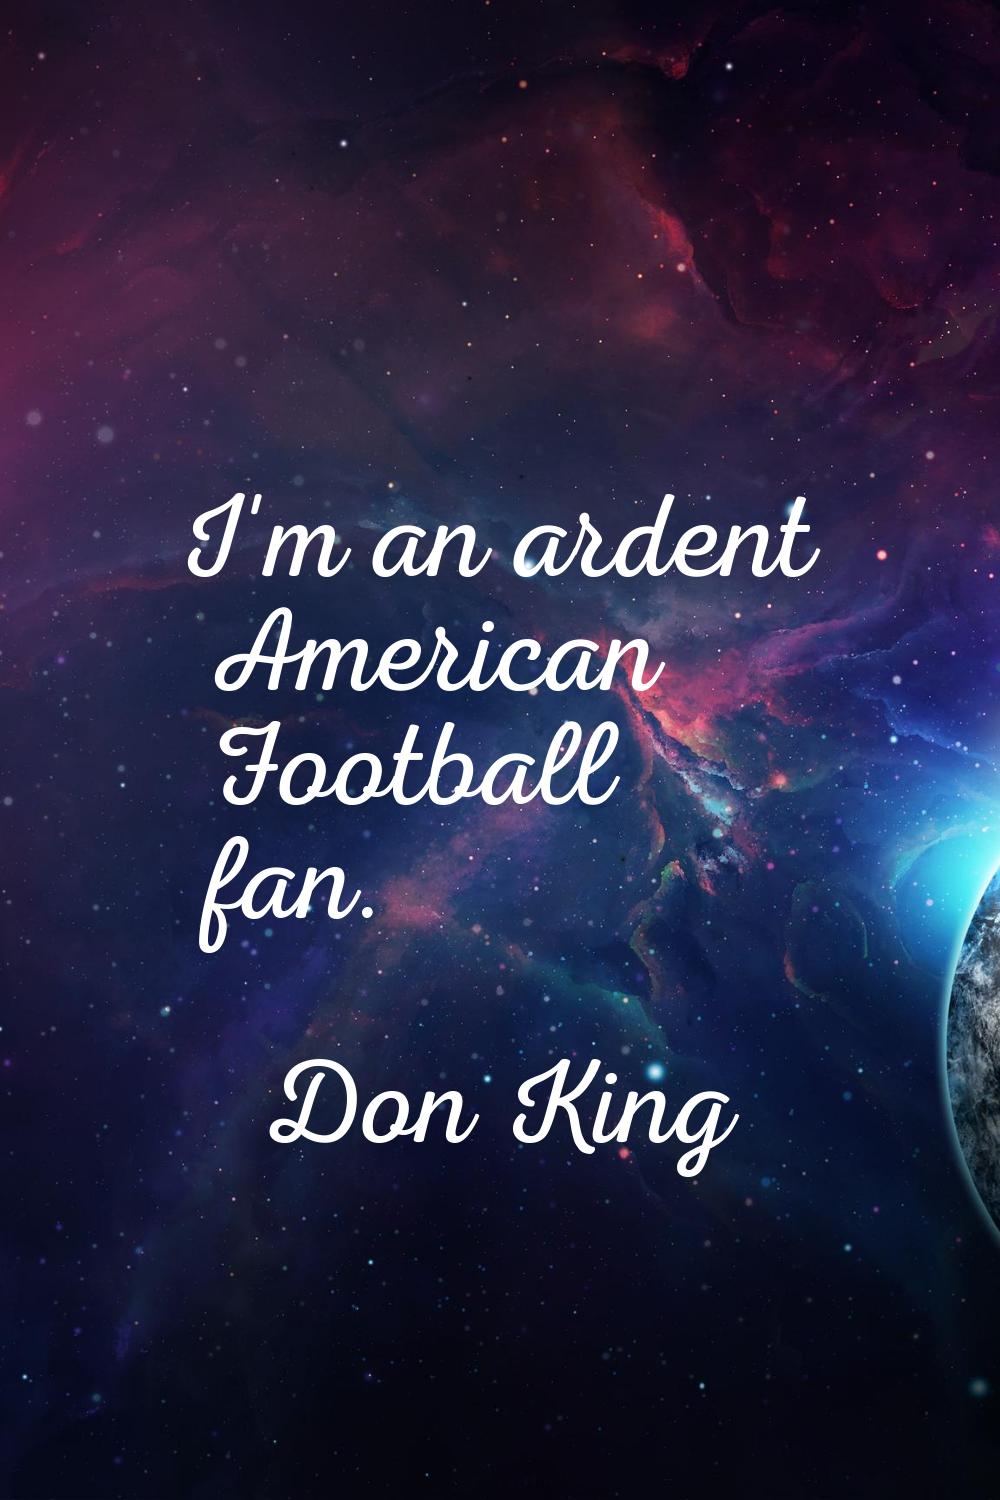 I'm an ardent American Football fan.